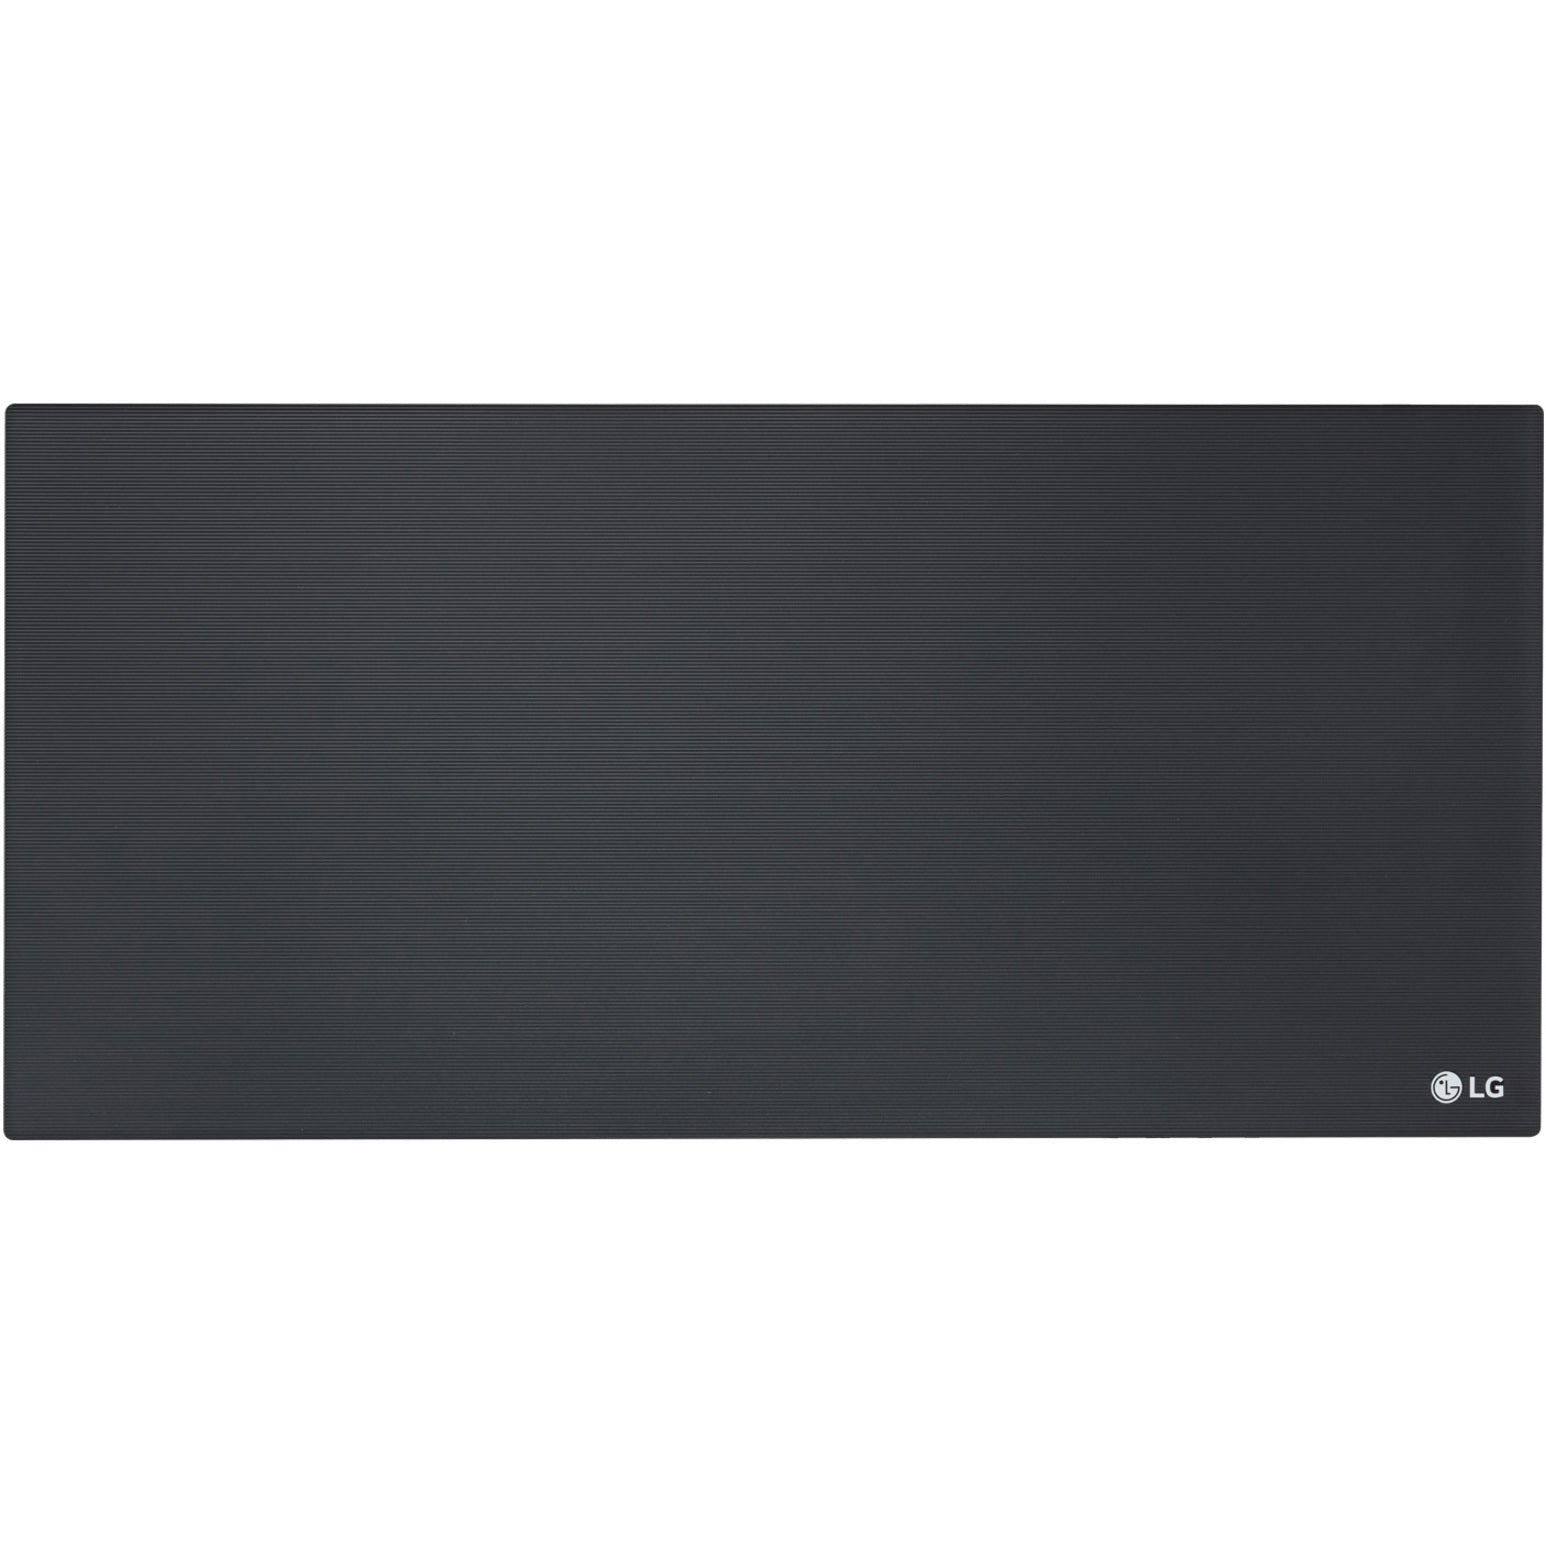 LG UBK90 4K Ultra HD HDR Dolby Vision Blu-ray Player, 2160p